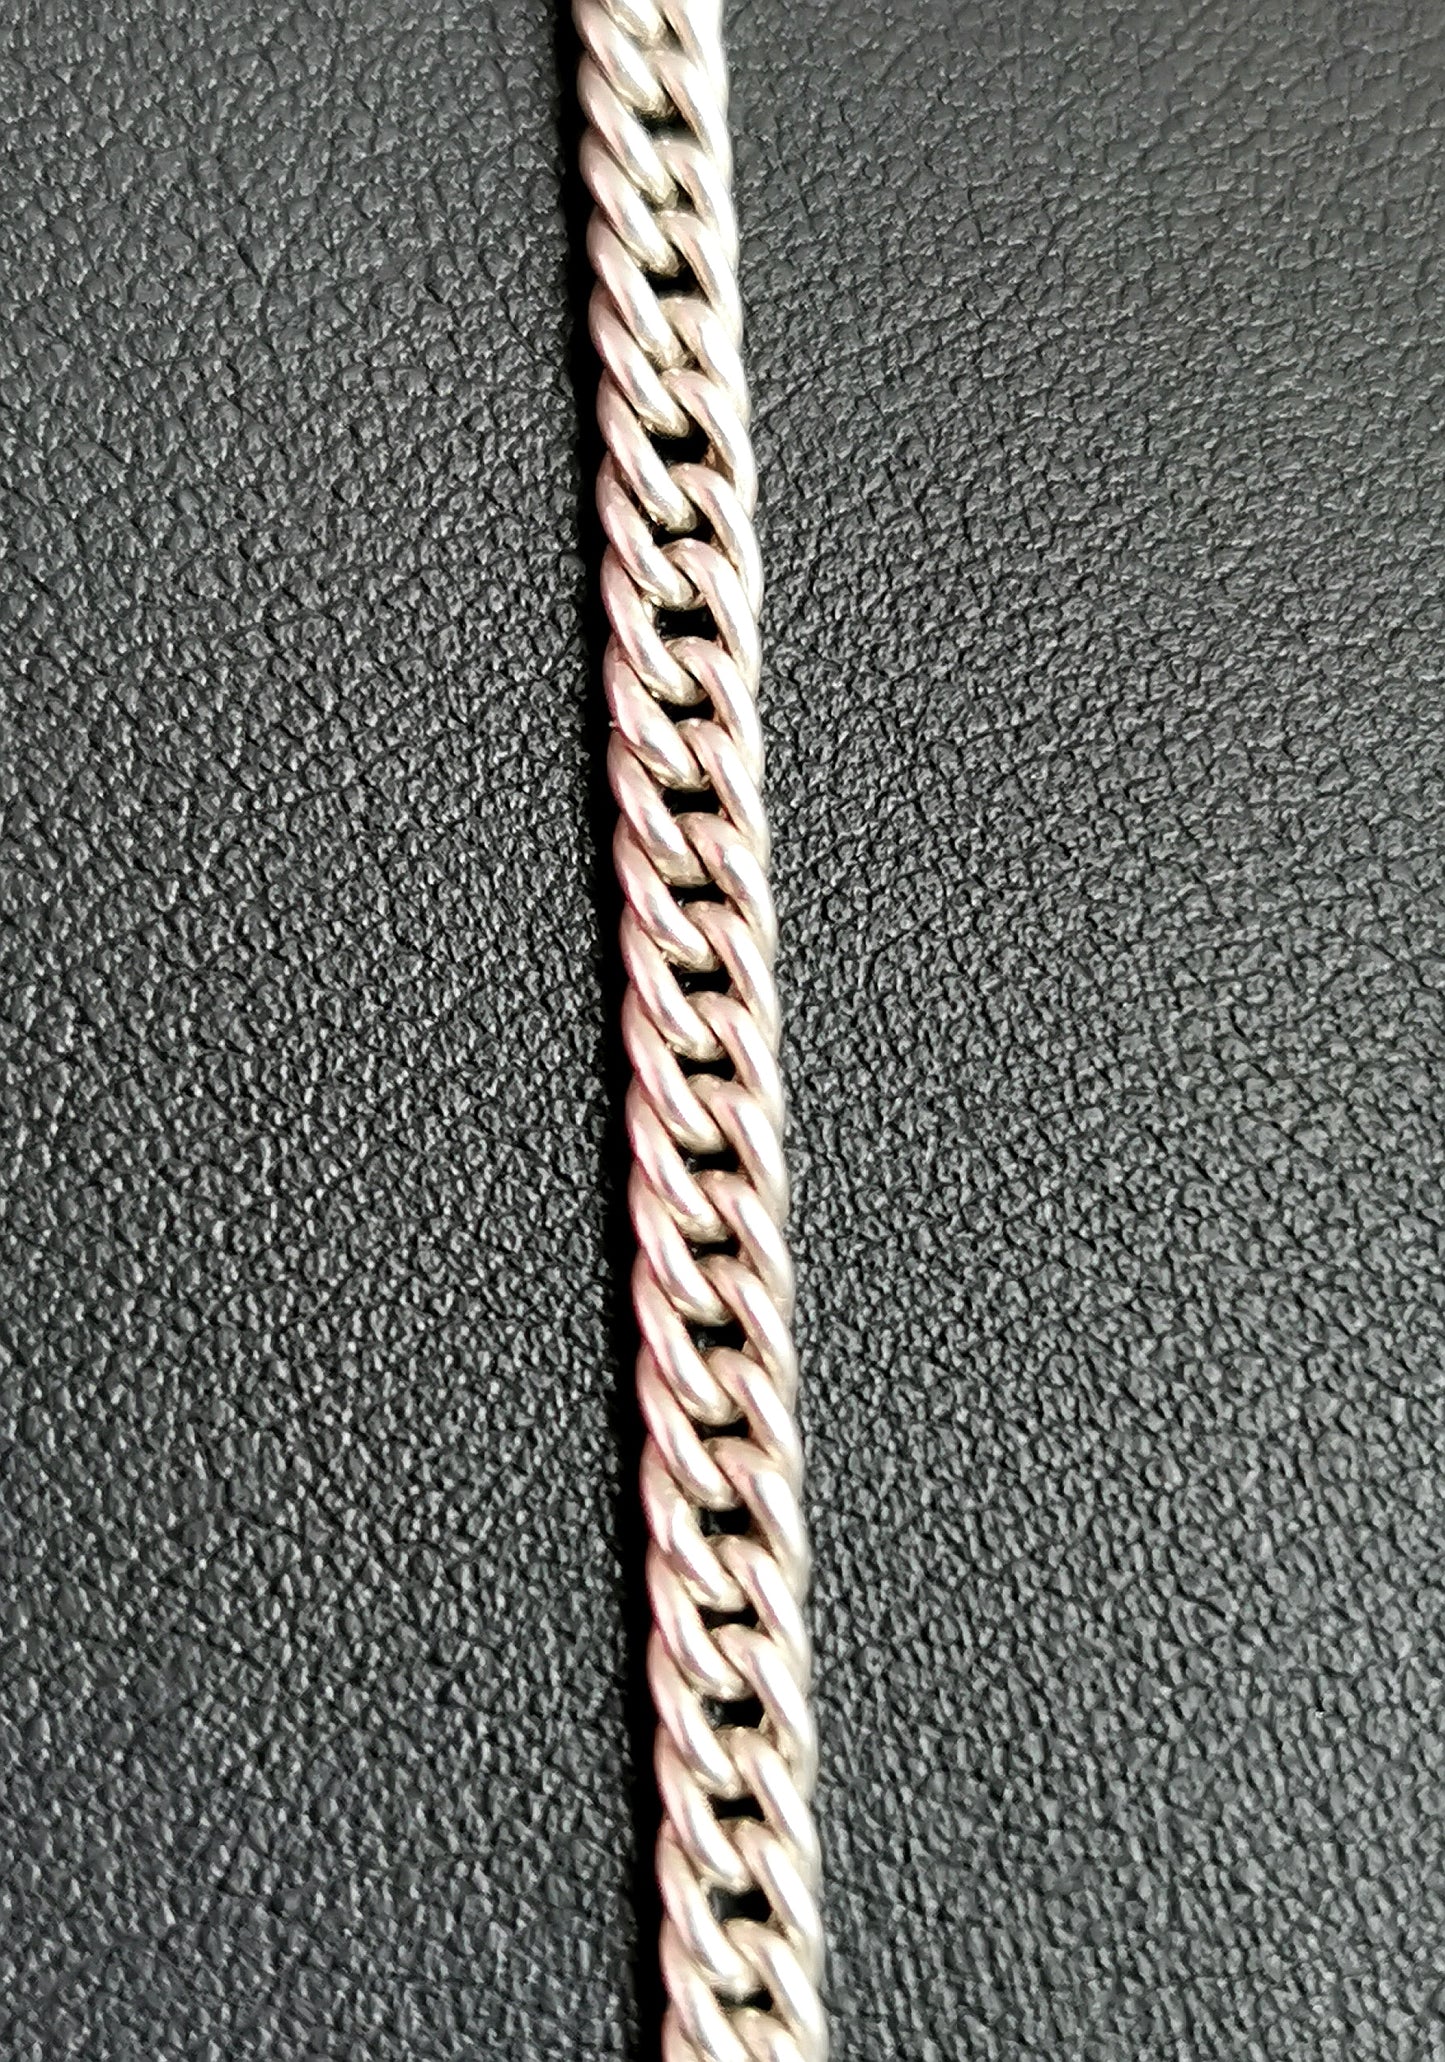 Antique Victorian silver curb link necklace